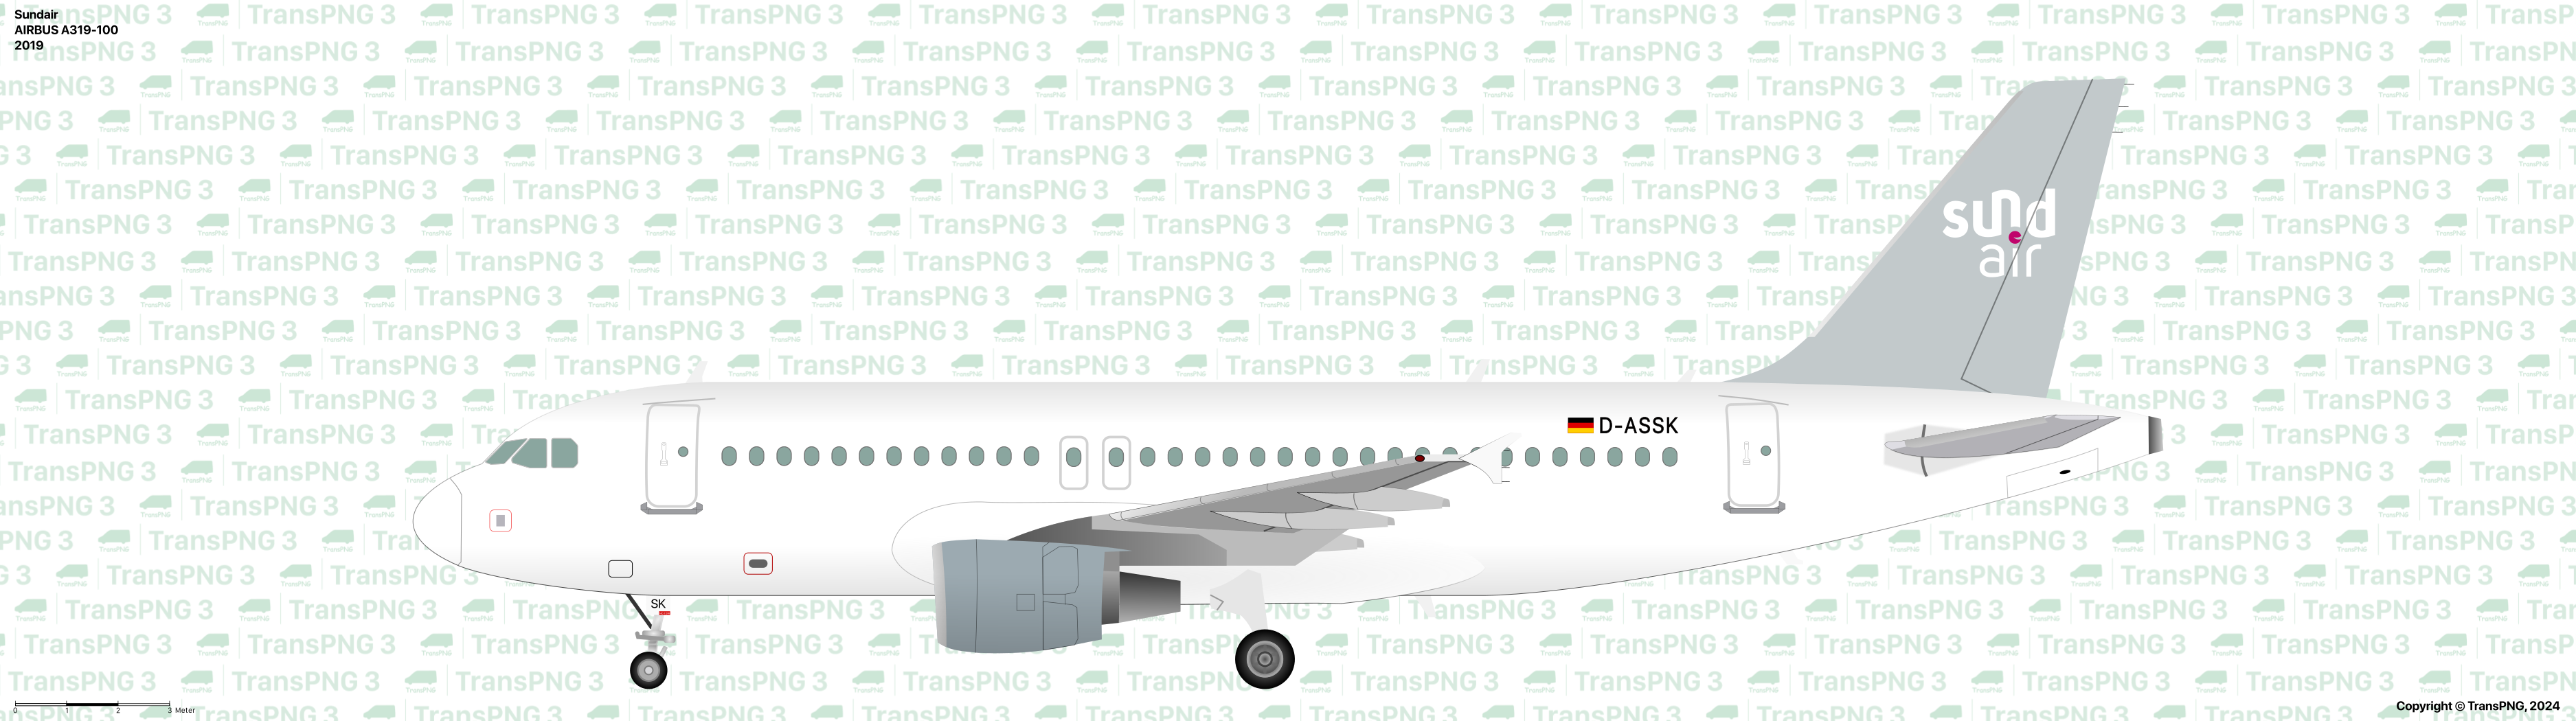 TransPNG.net | 分享世界各地多種交通工具的優秀繪圖 - 客機 53505217167_1b1a94b9b7_o